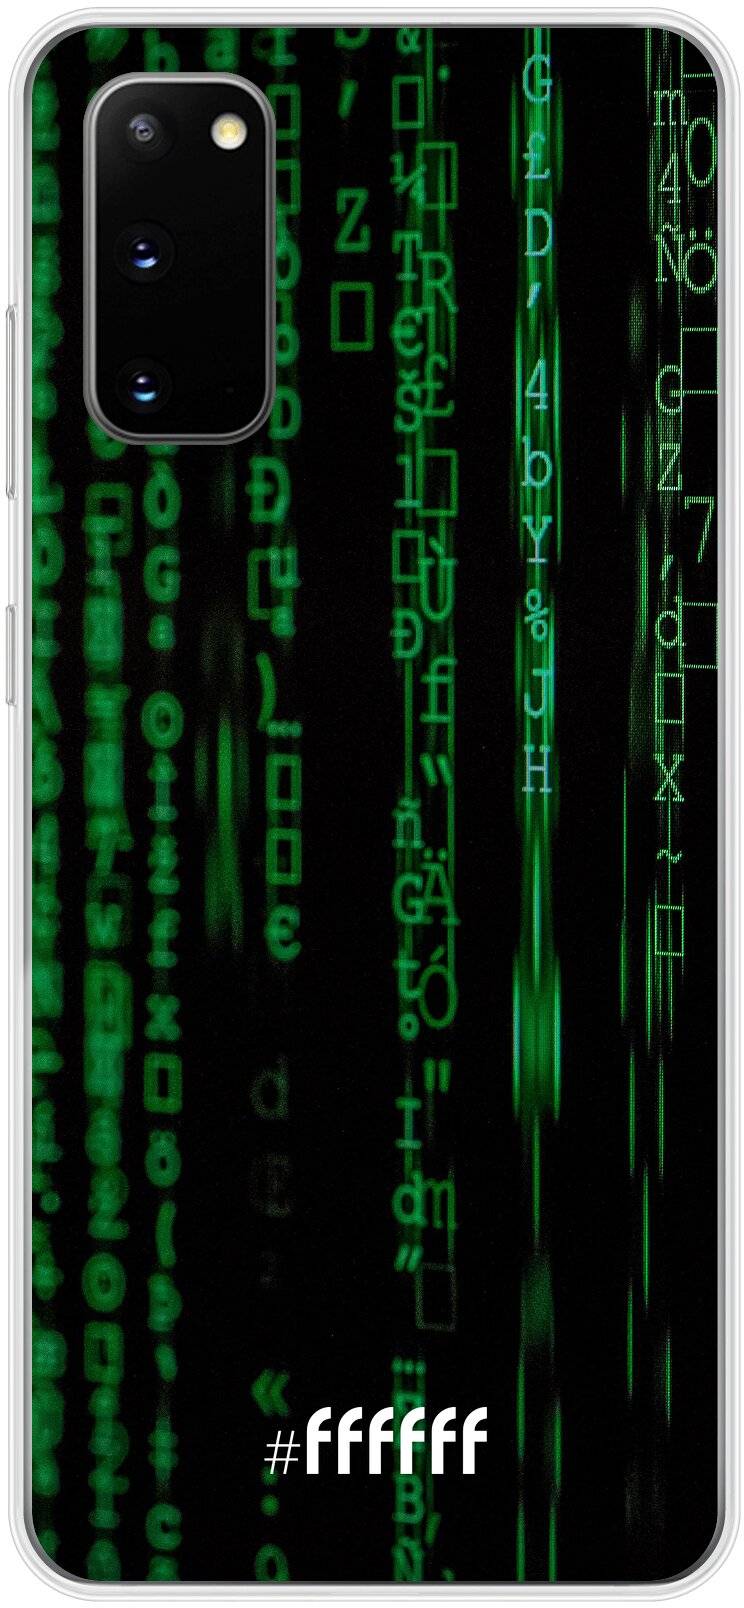 Hacking The Matrix Galaxy S20